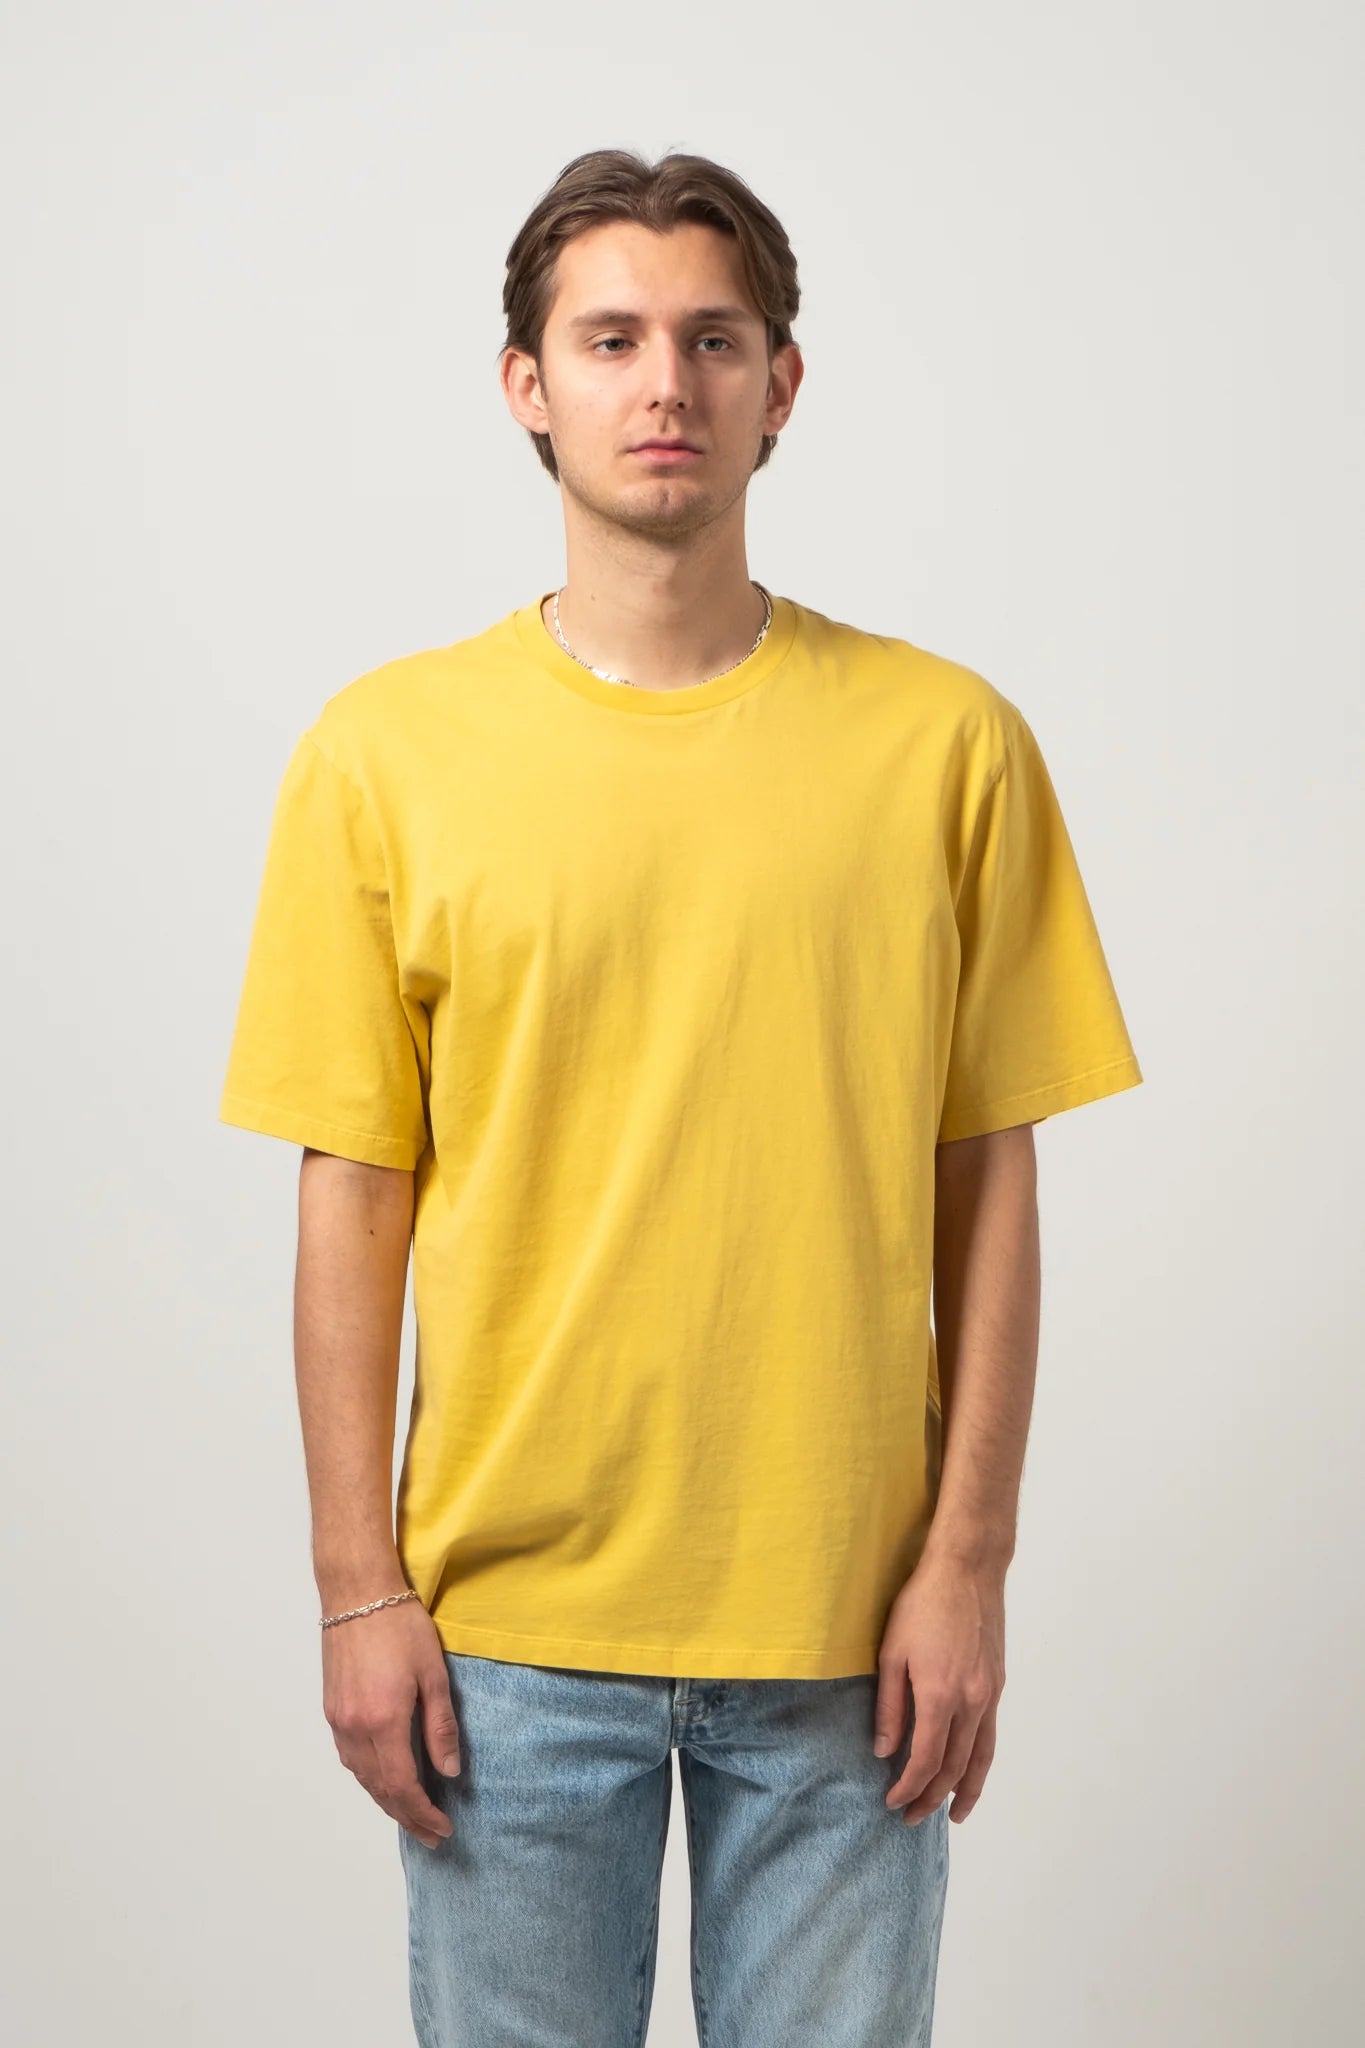 C.O.F. Studio Crewneck T-Shirt in mustard